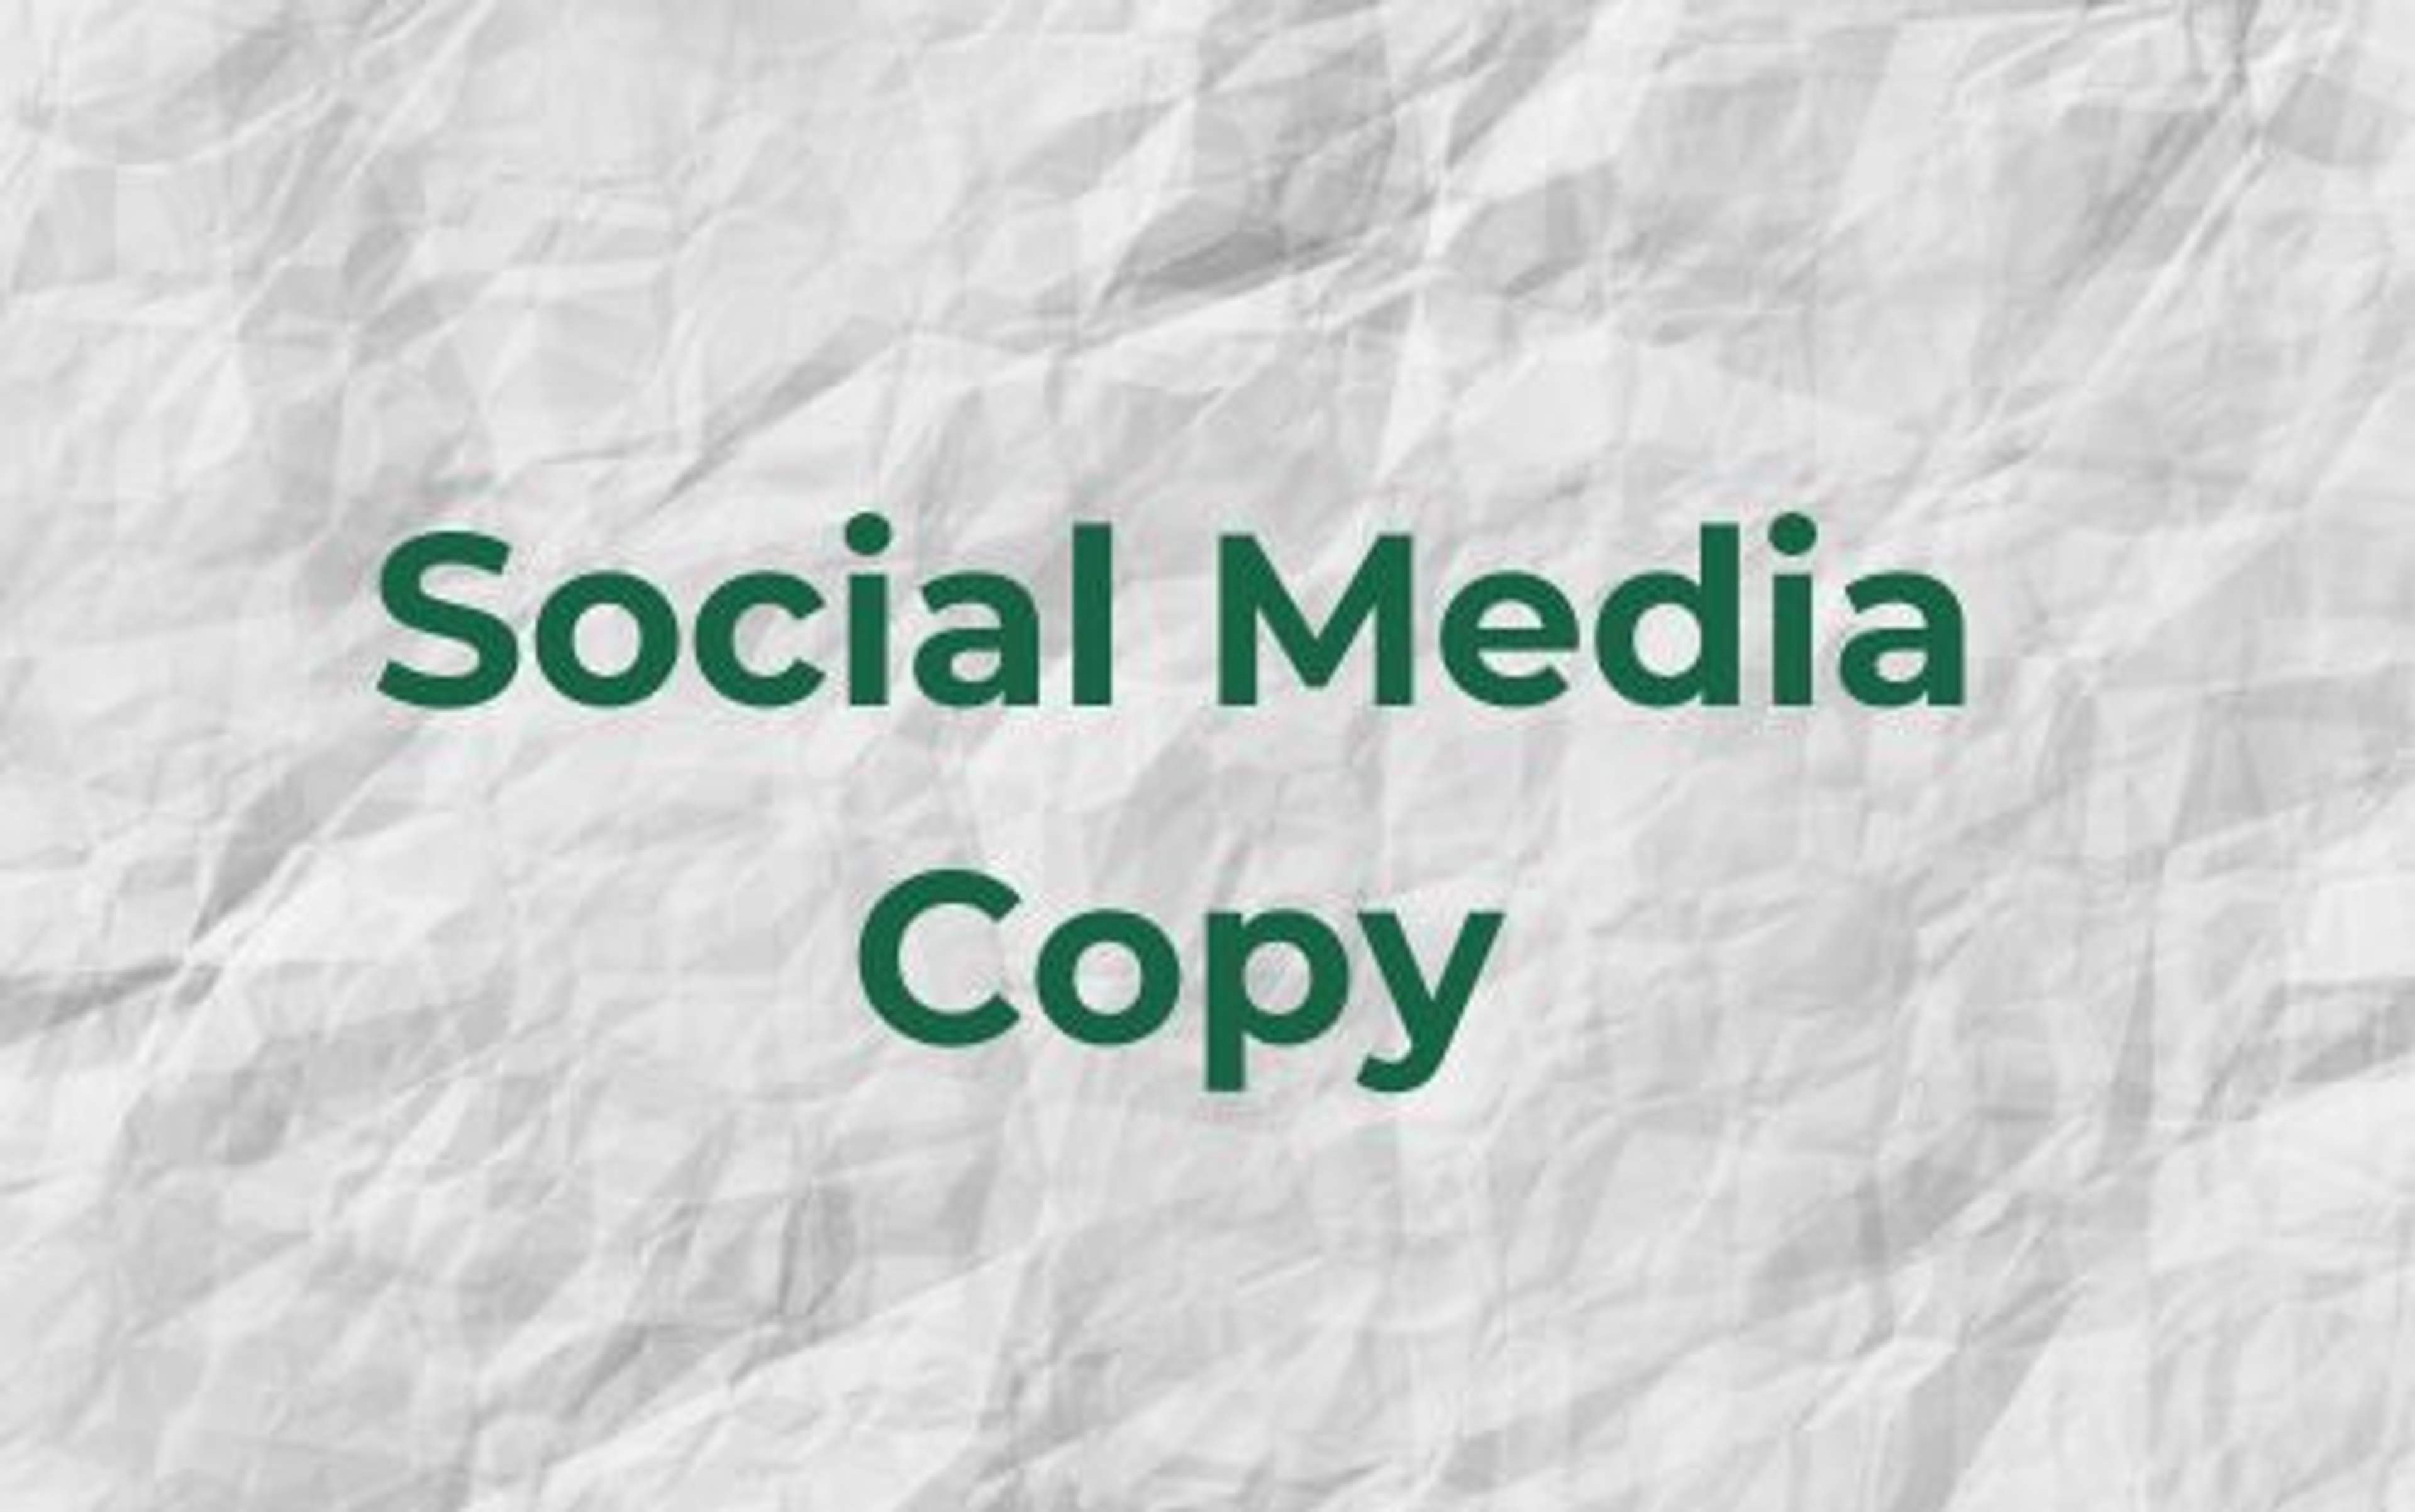 social media copywriting services offered by savanna semenetz 